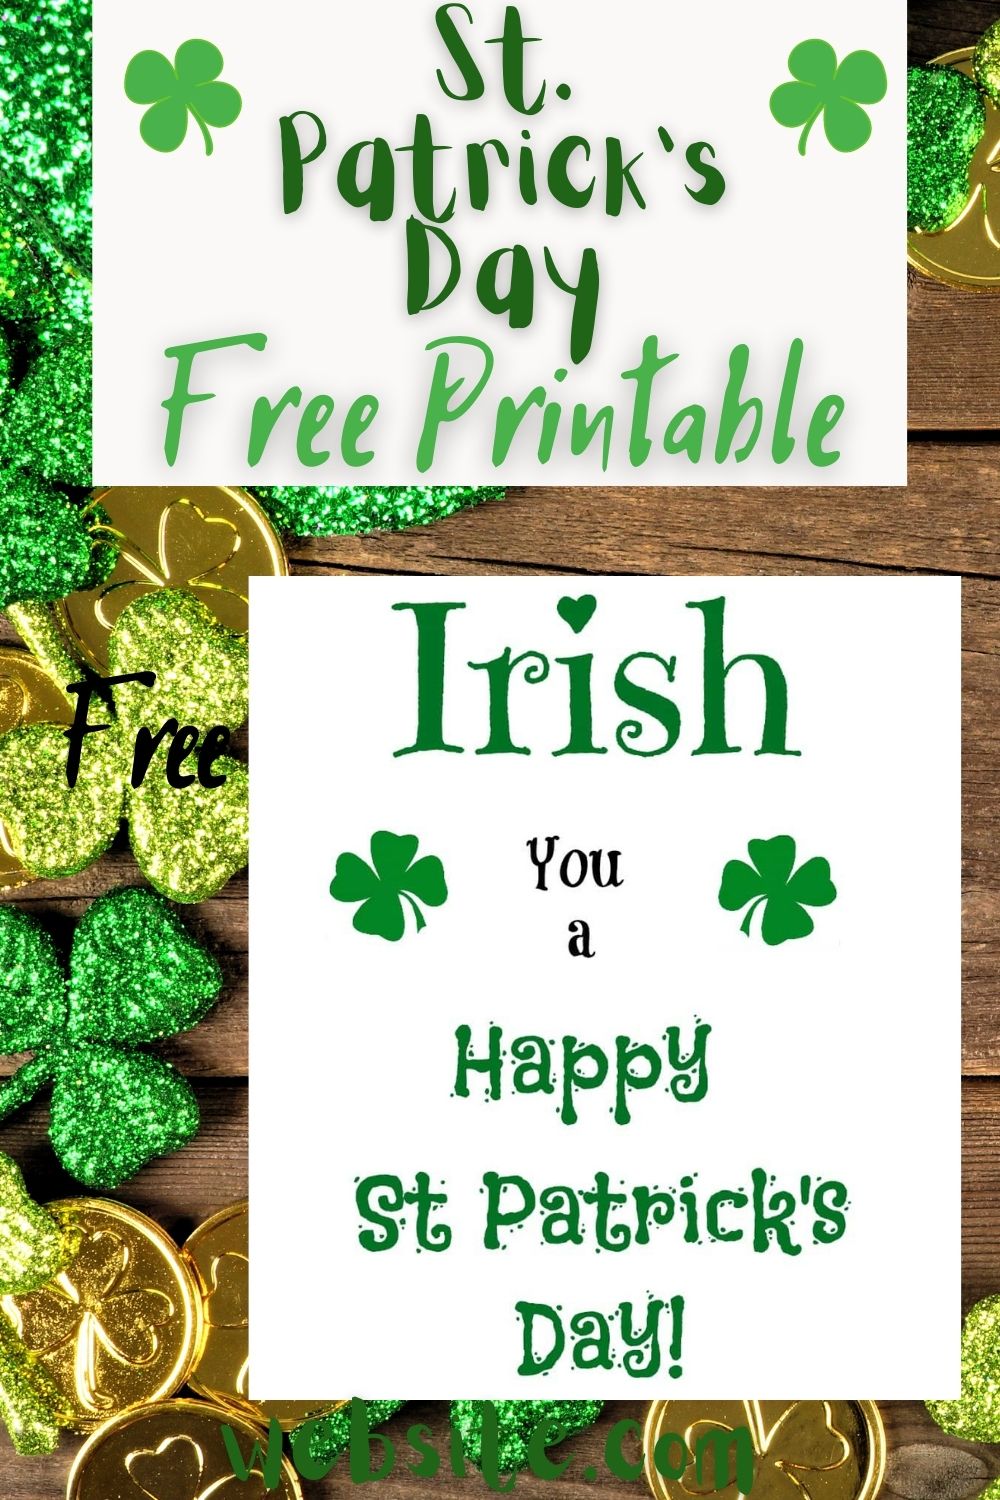 St. Patrick's Day Free Printable